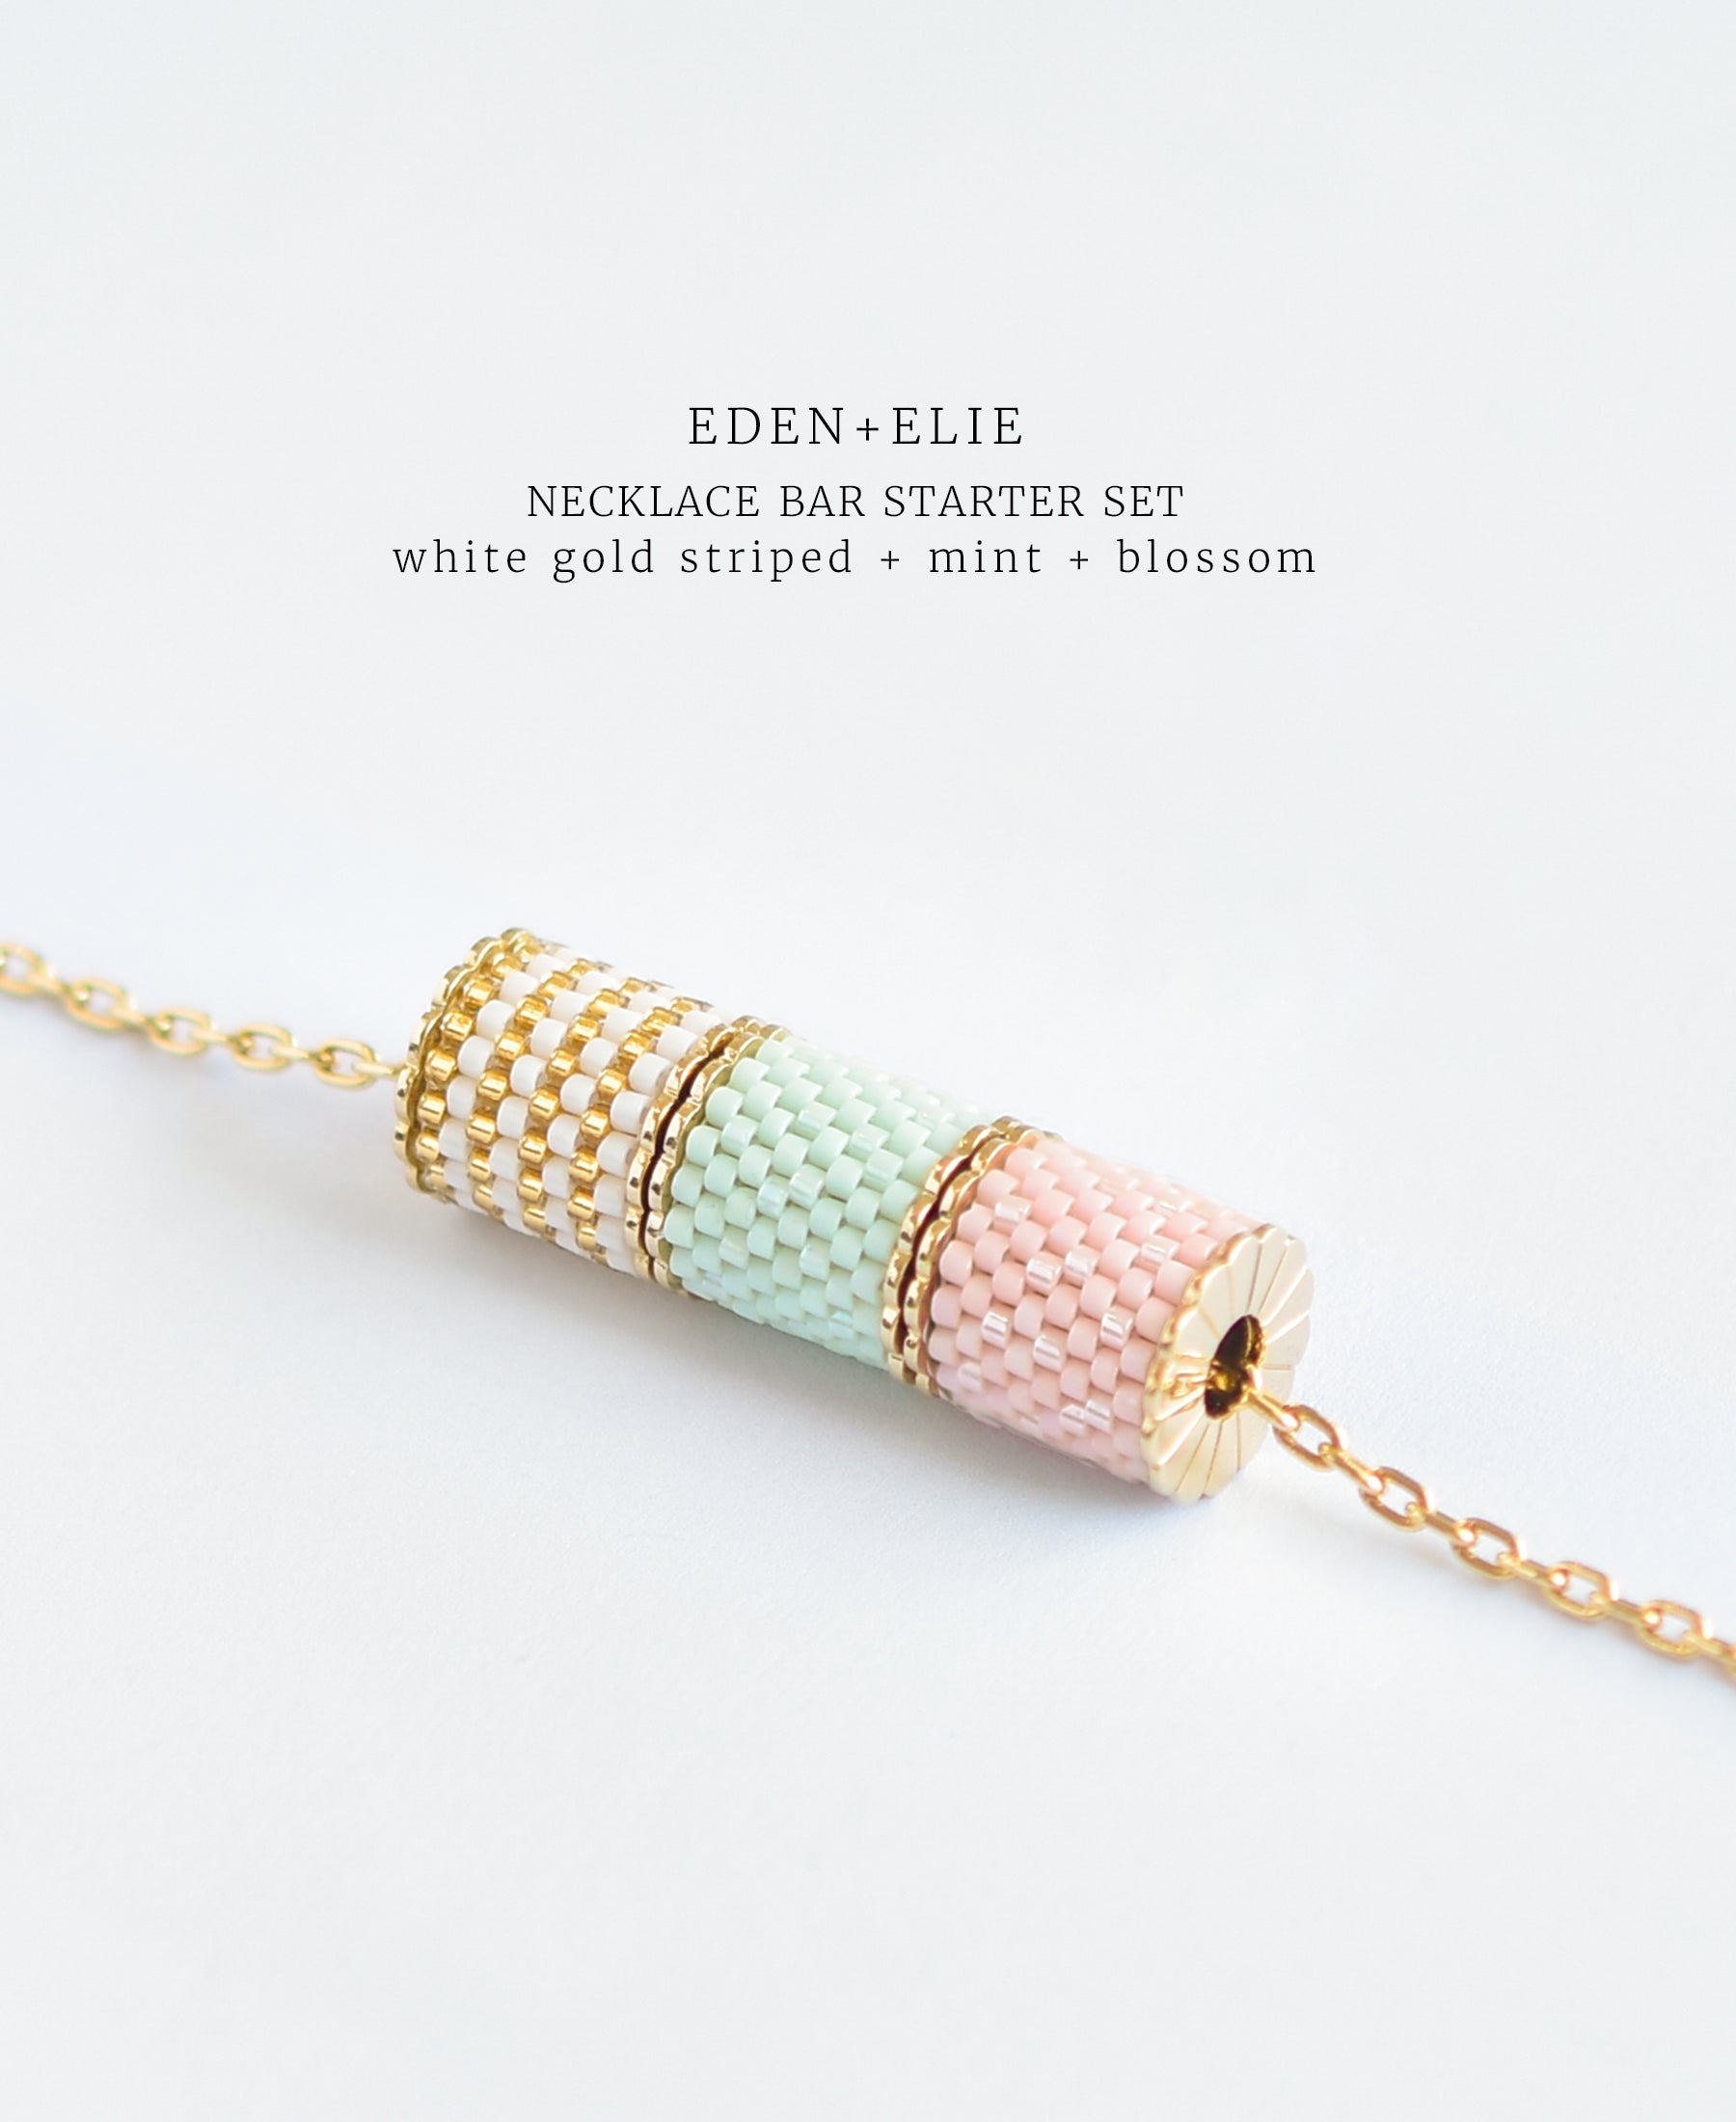 EDEN + ELIE Necklace Bar 3 bead starter set - blossom + mint + white gold striped